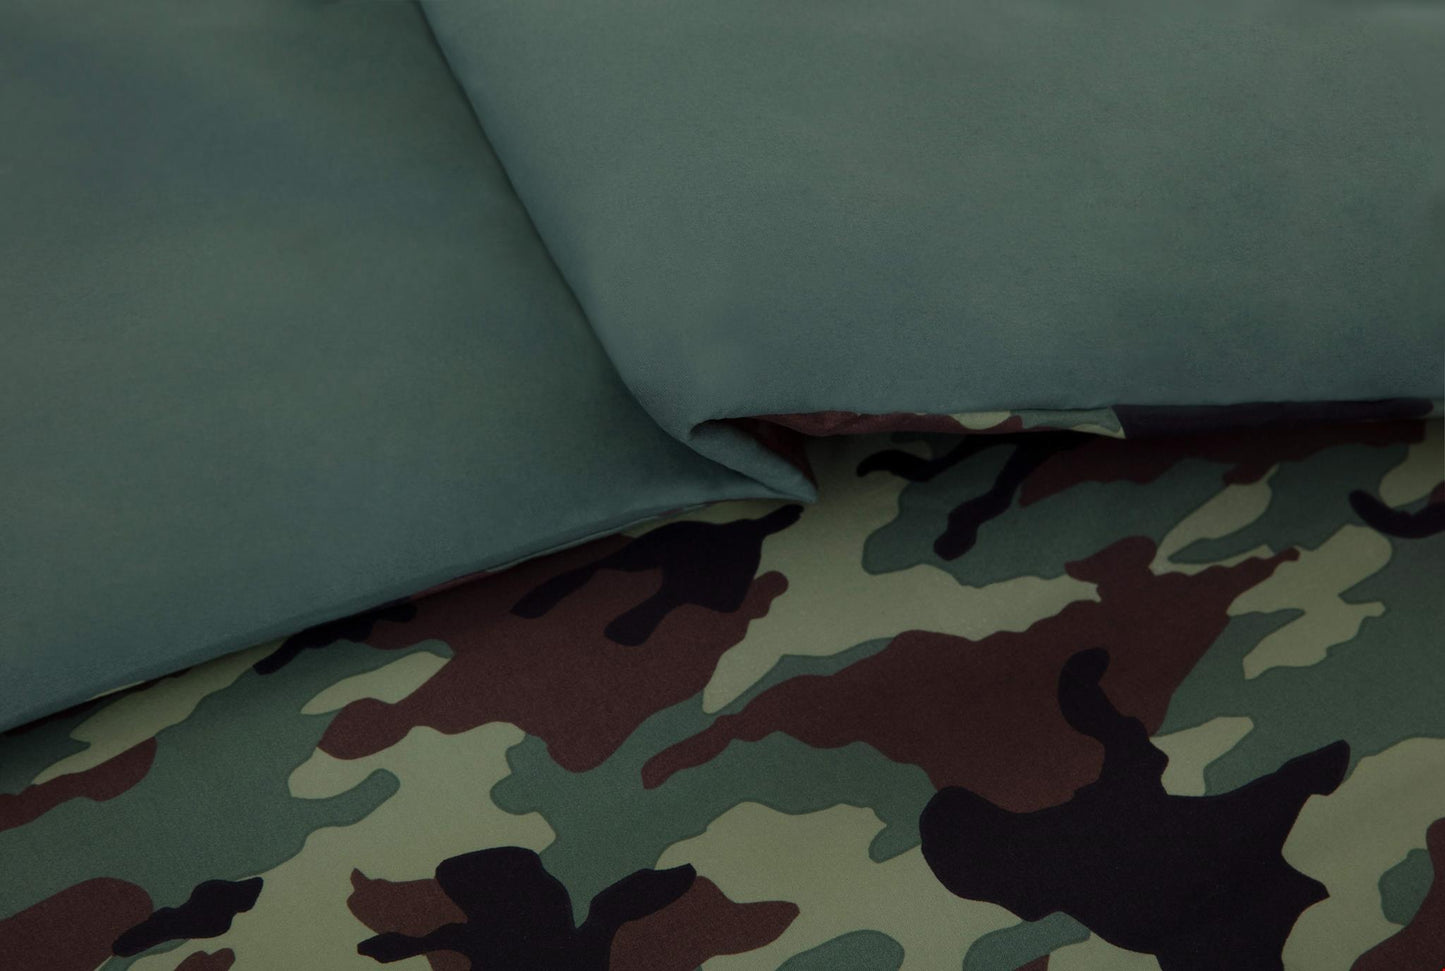 Military Camouflage 3-Piece Microfiber Comforter Set